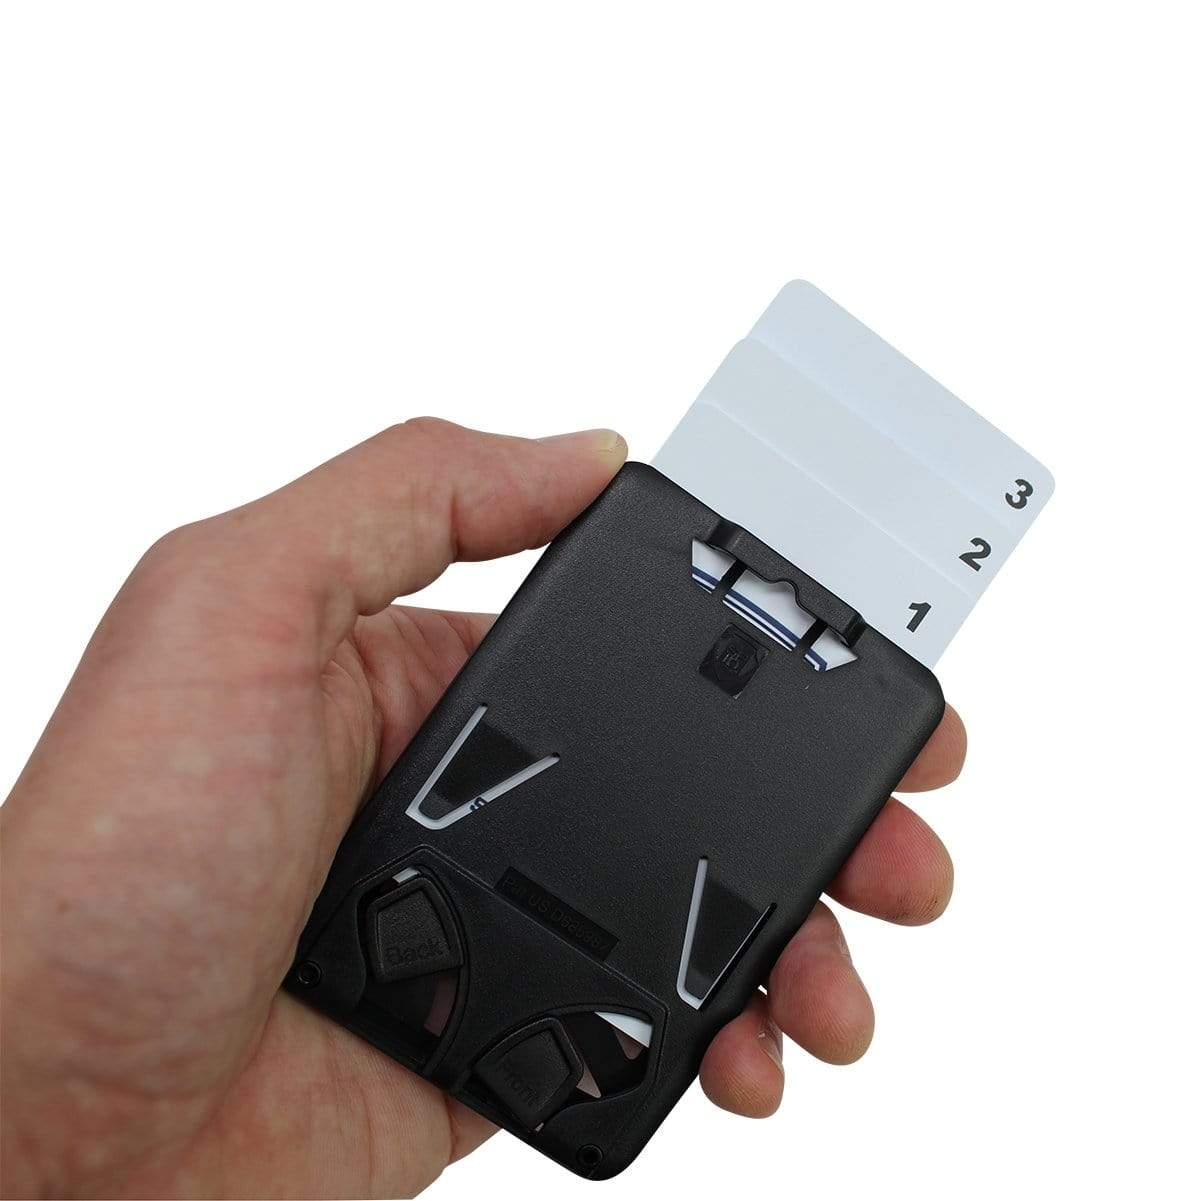 Hard Plastic 3 Card Badge Holder with Retractable Reel - Retracting ID Lanyard Features Belt Clip & Carabiner - Rigid Vertical CAC Holder - Top Load